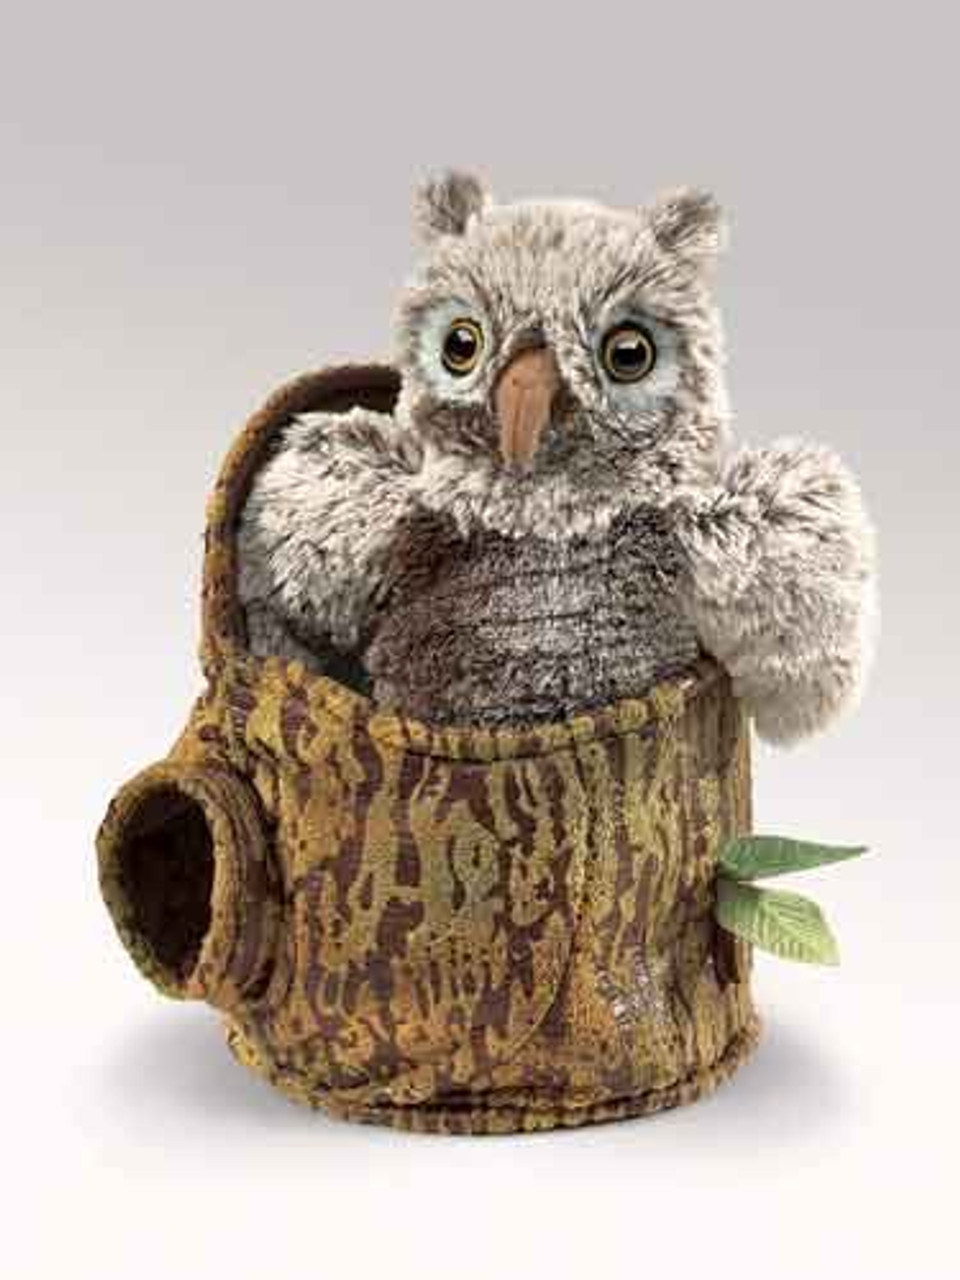 Owlet in Tree Stump Puppet